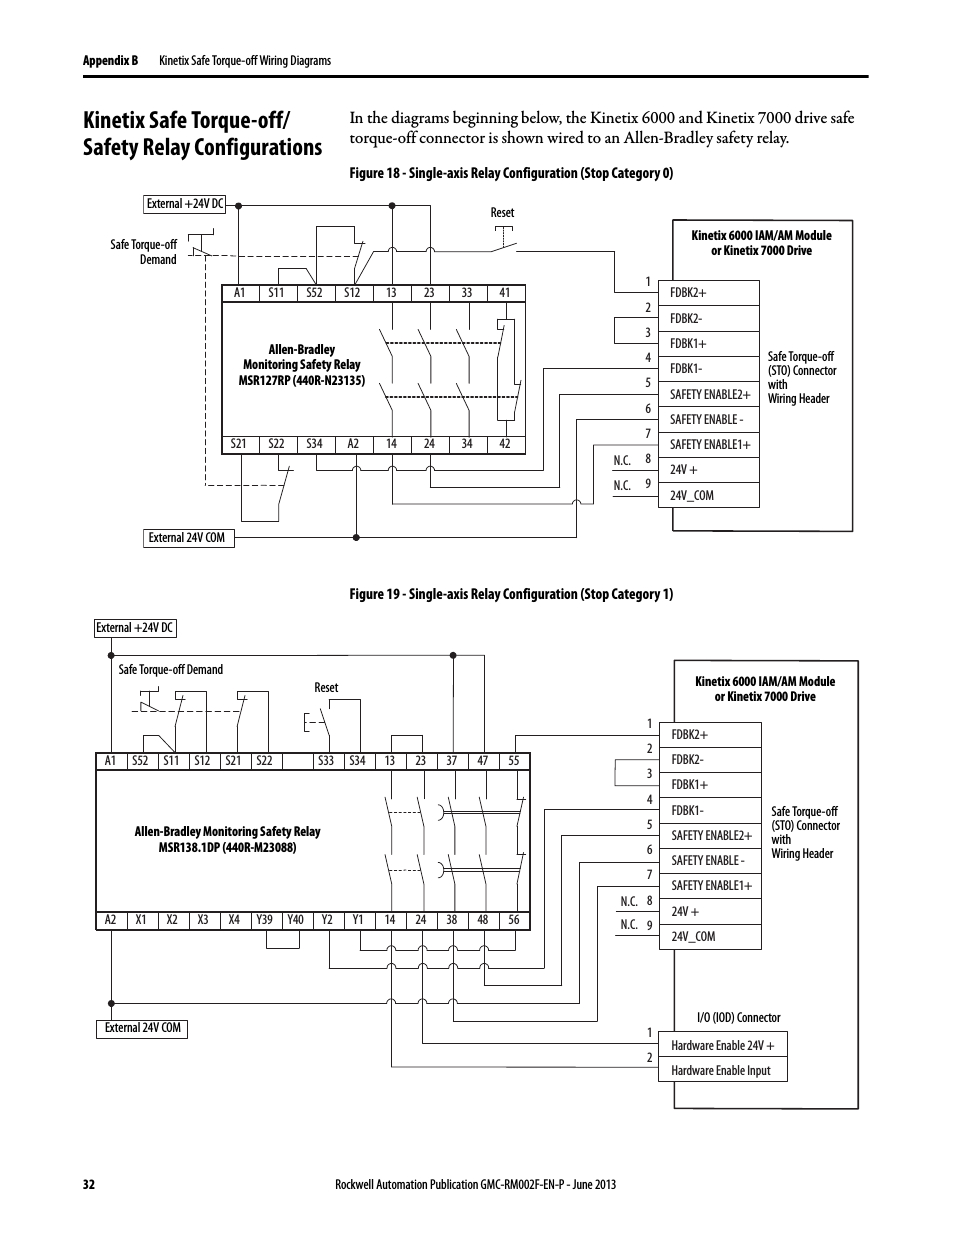 Rockwell Automation 2099-Bmxx-S Kinetix Safe Torque-Off Feature - Allen Bradley Safety Relay Wiring Diagram